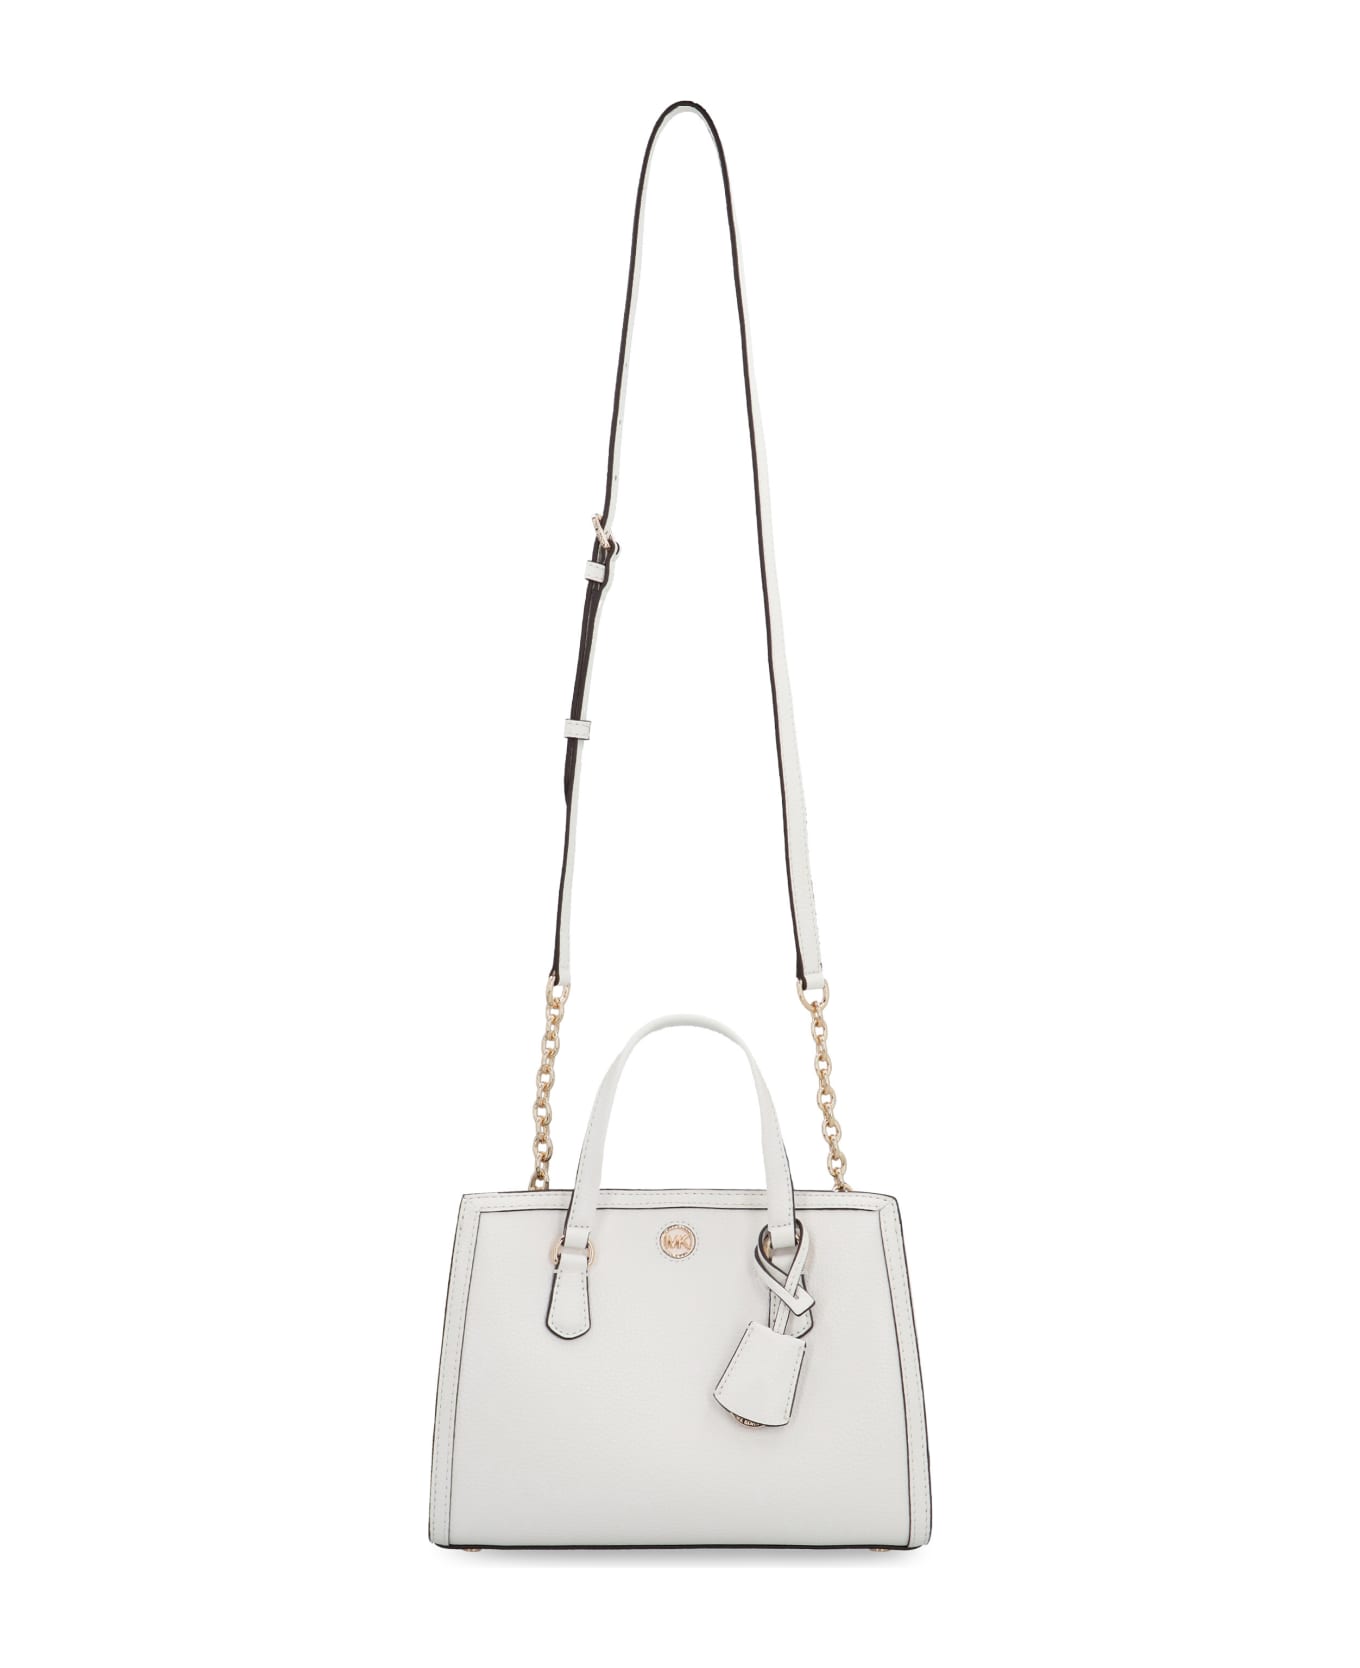 MICHAEL Michael Kors Chantal Leather Handbag - White トートバッグ